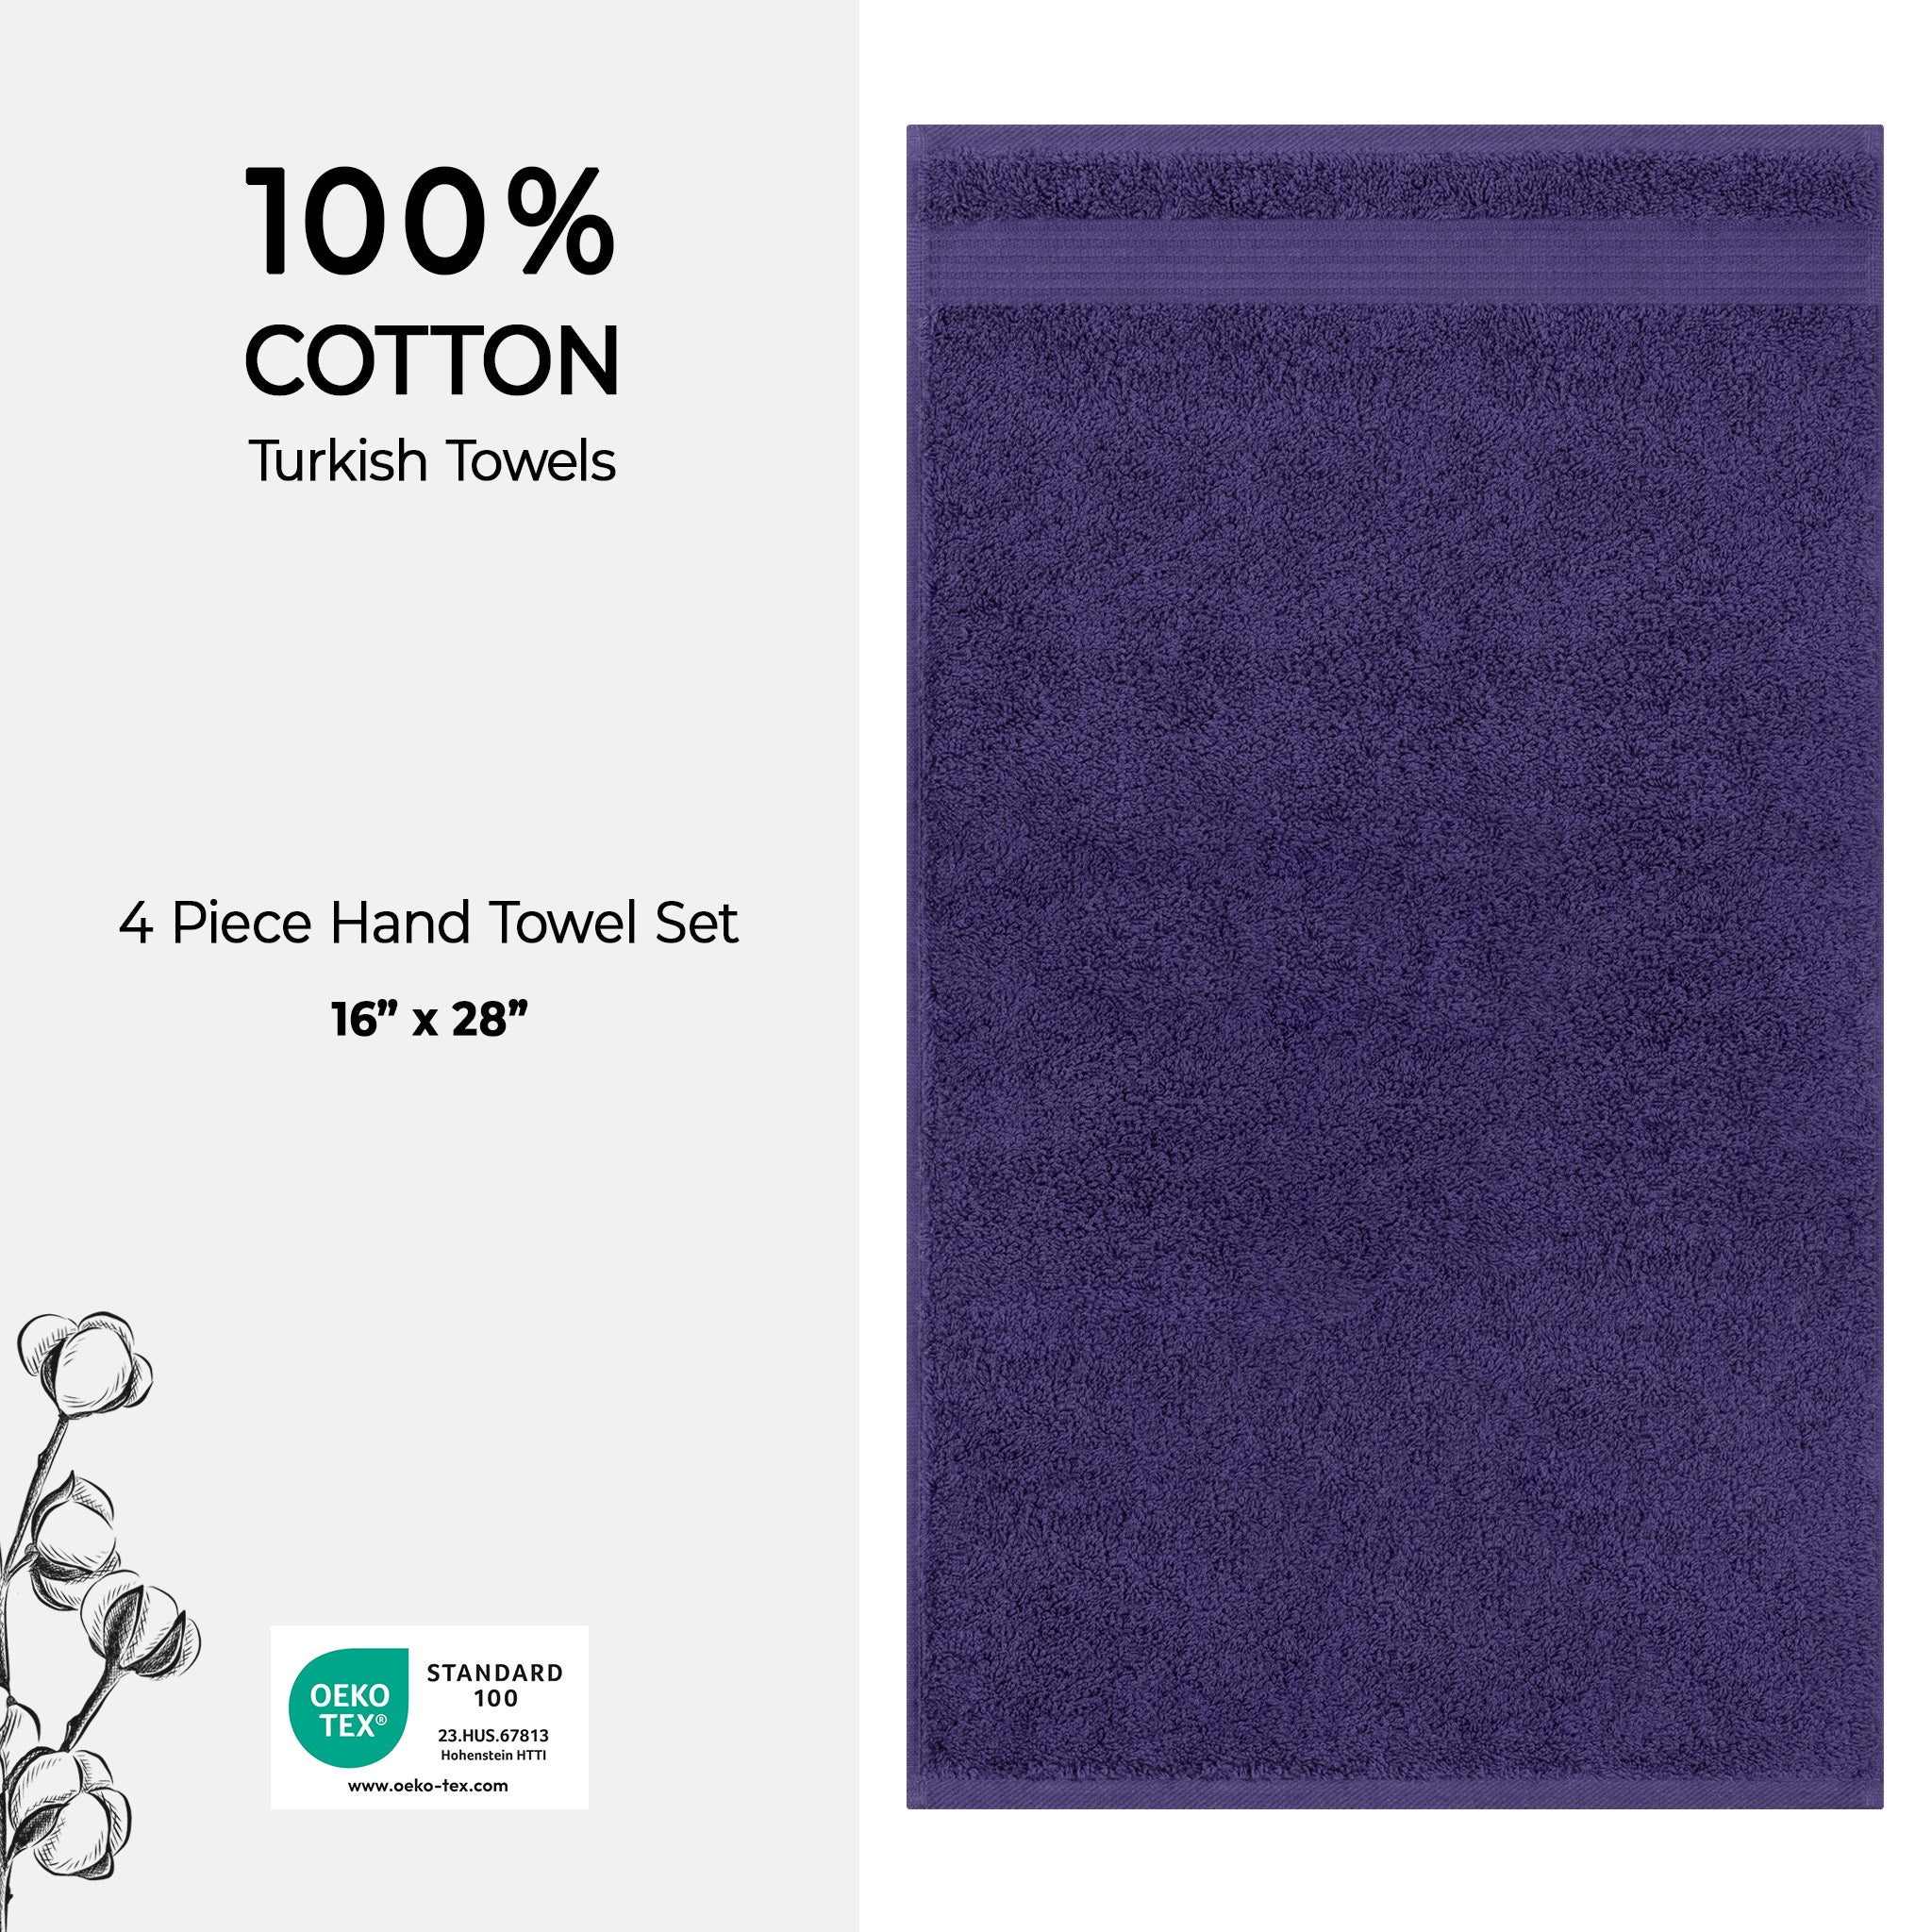 American Soft Linen Bekos 100% Cotton Turkish Towels, 4 Piece Hand Towel Set -purple-04